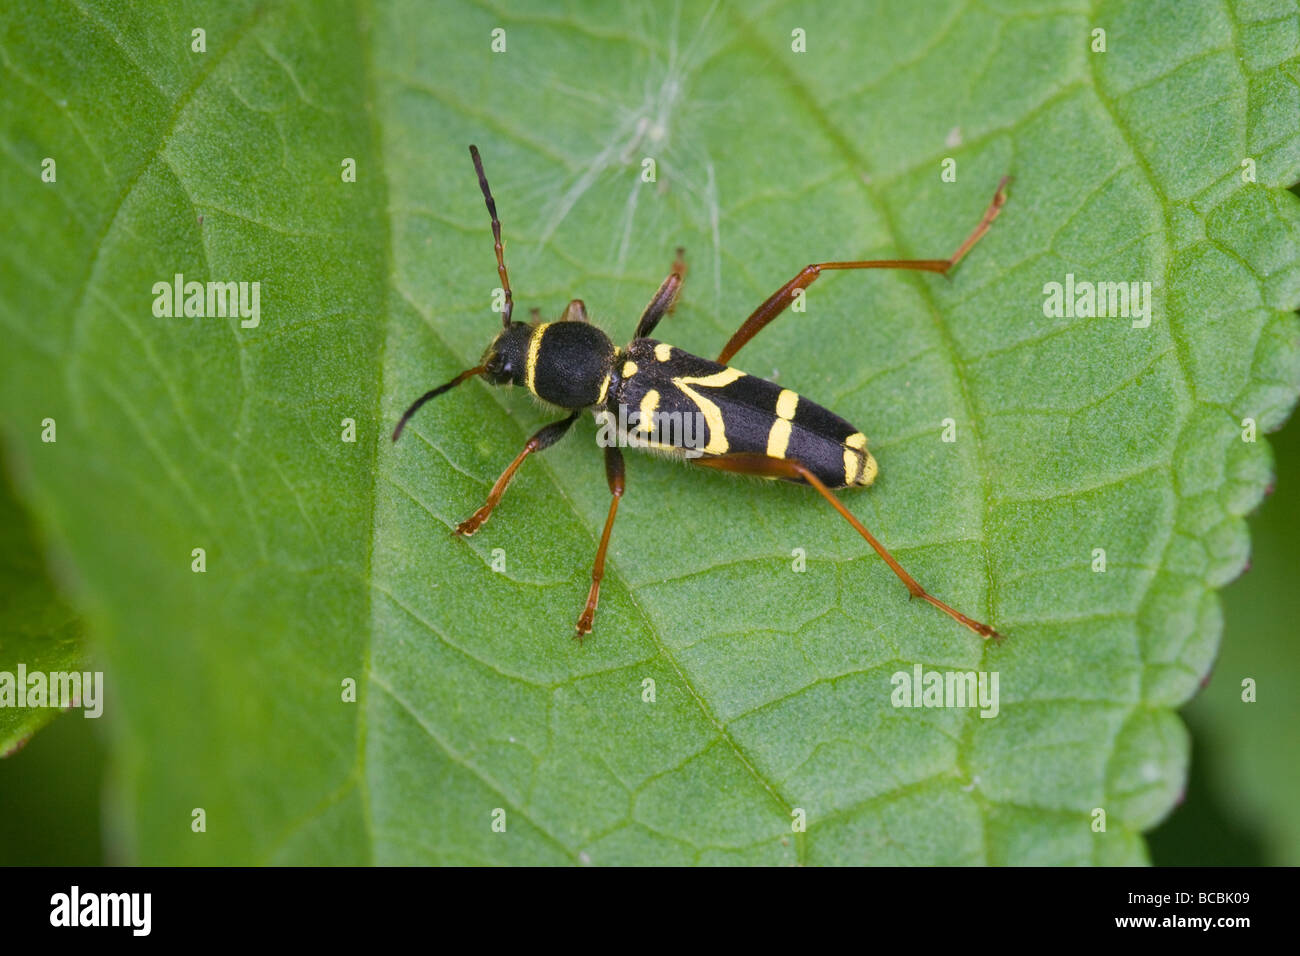 Wasp Beetle Clyttus arietus a riposo su una foglia Foto Stock